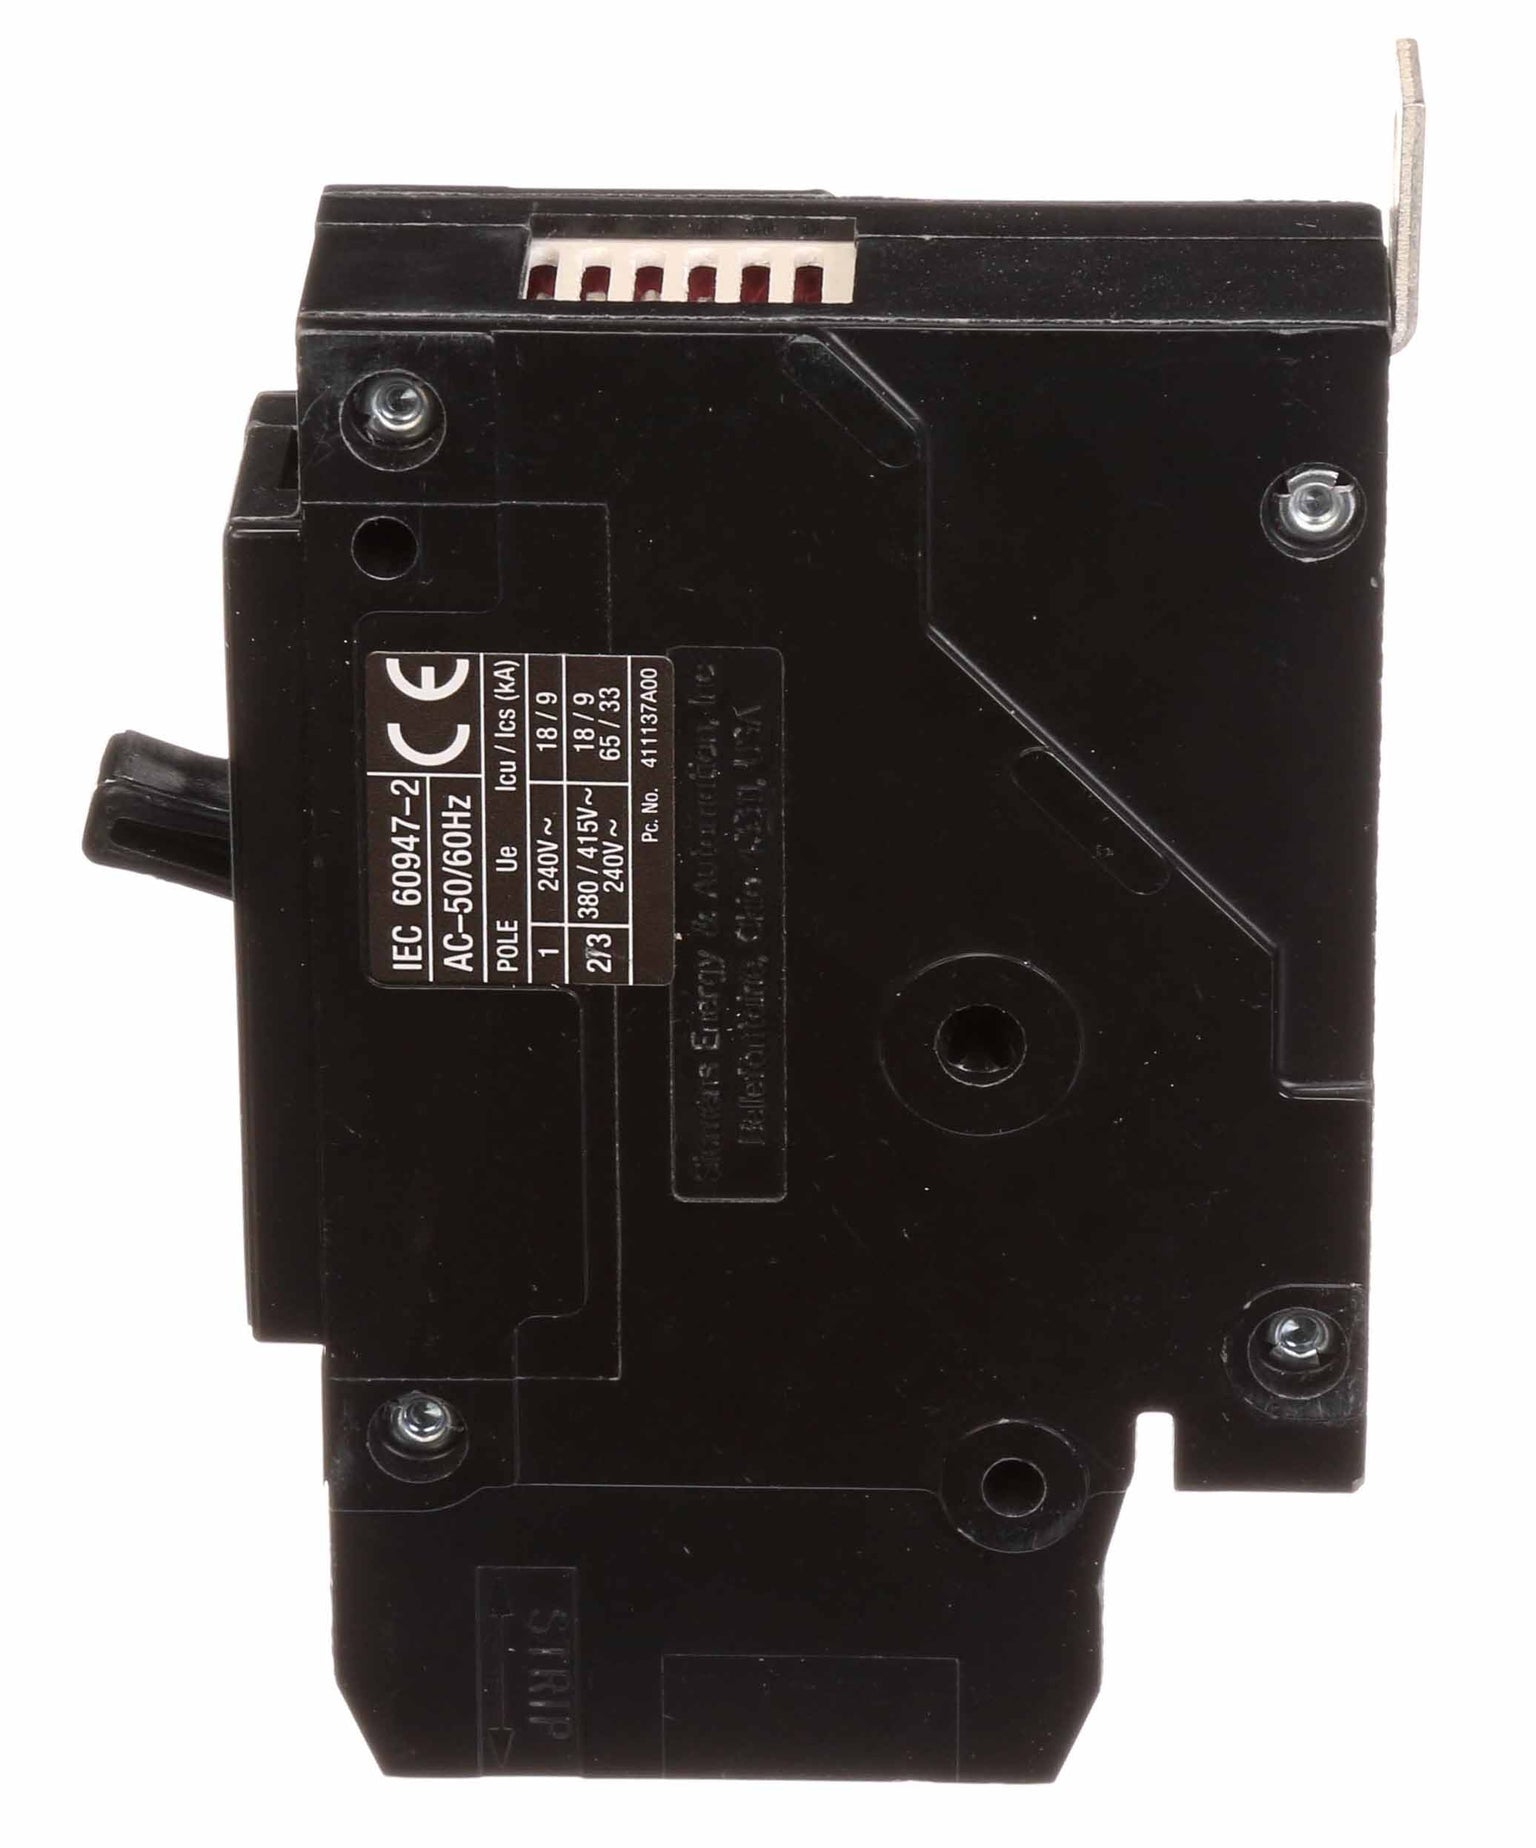 BQD160 - Siemens - 60 Amp Molded Case Circuit Breaker